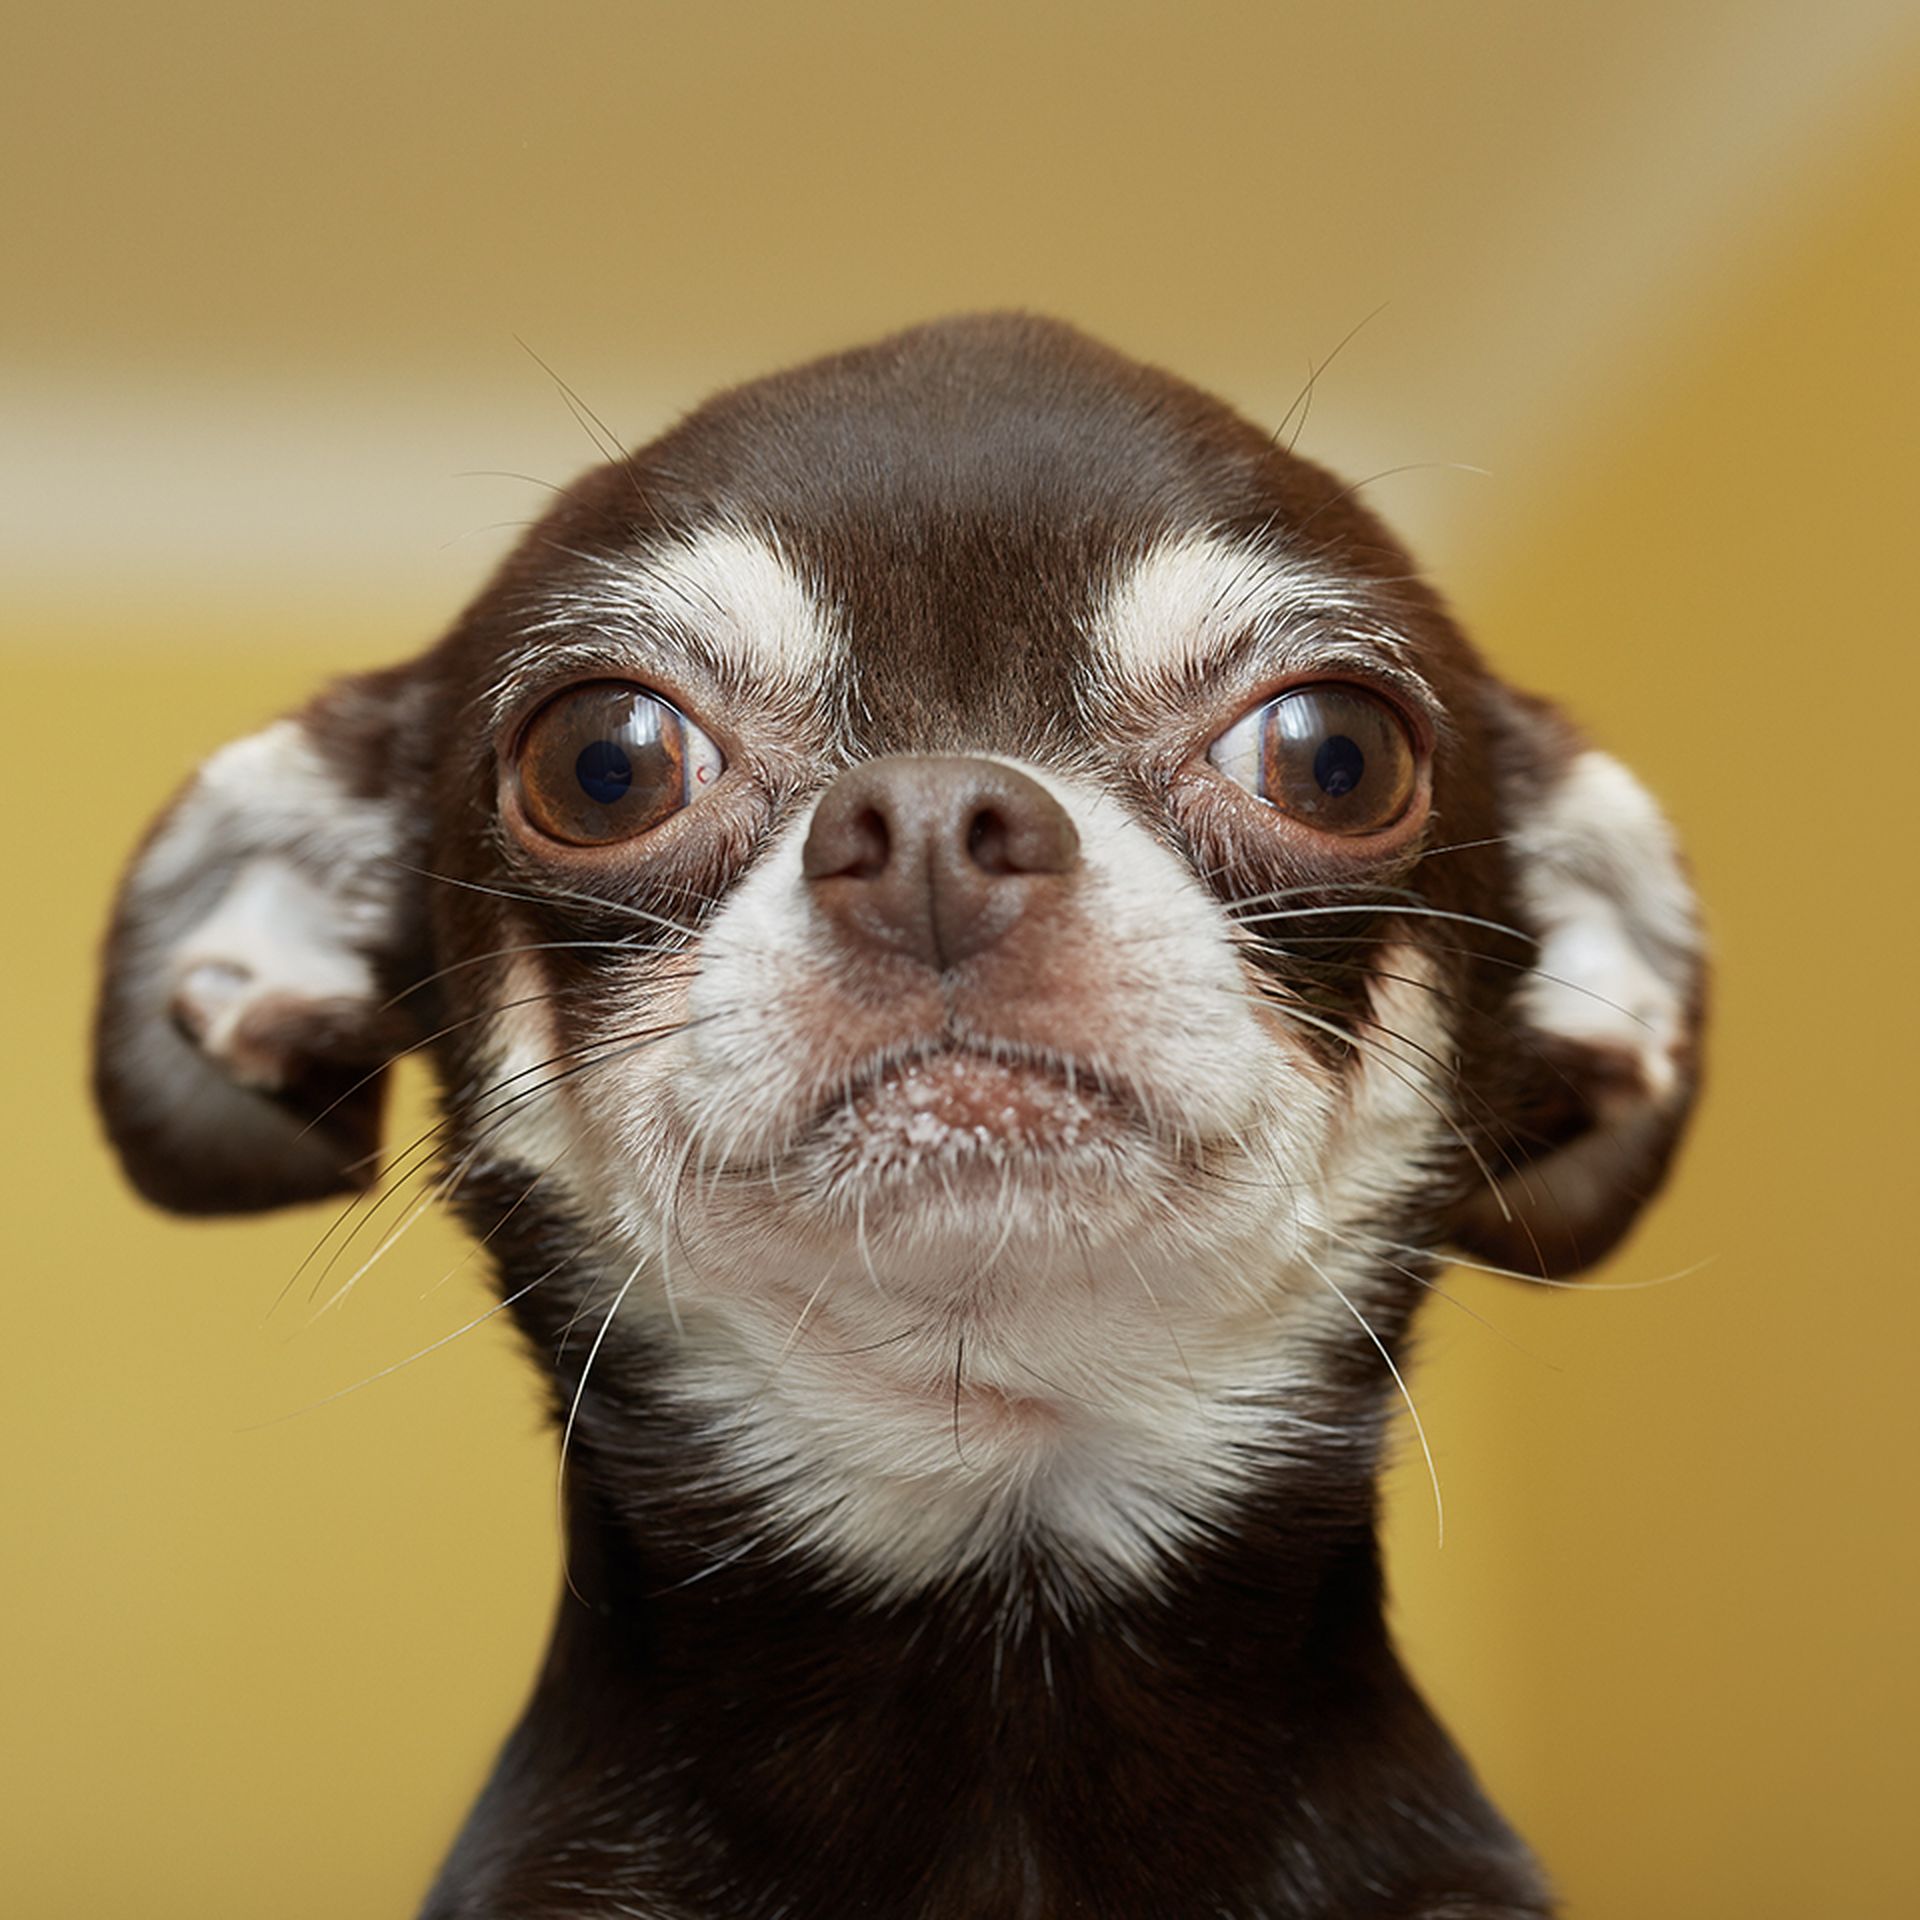 A close-up headshot of a calm chihuahua.